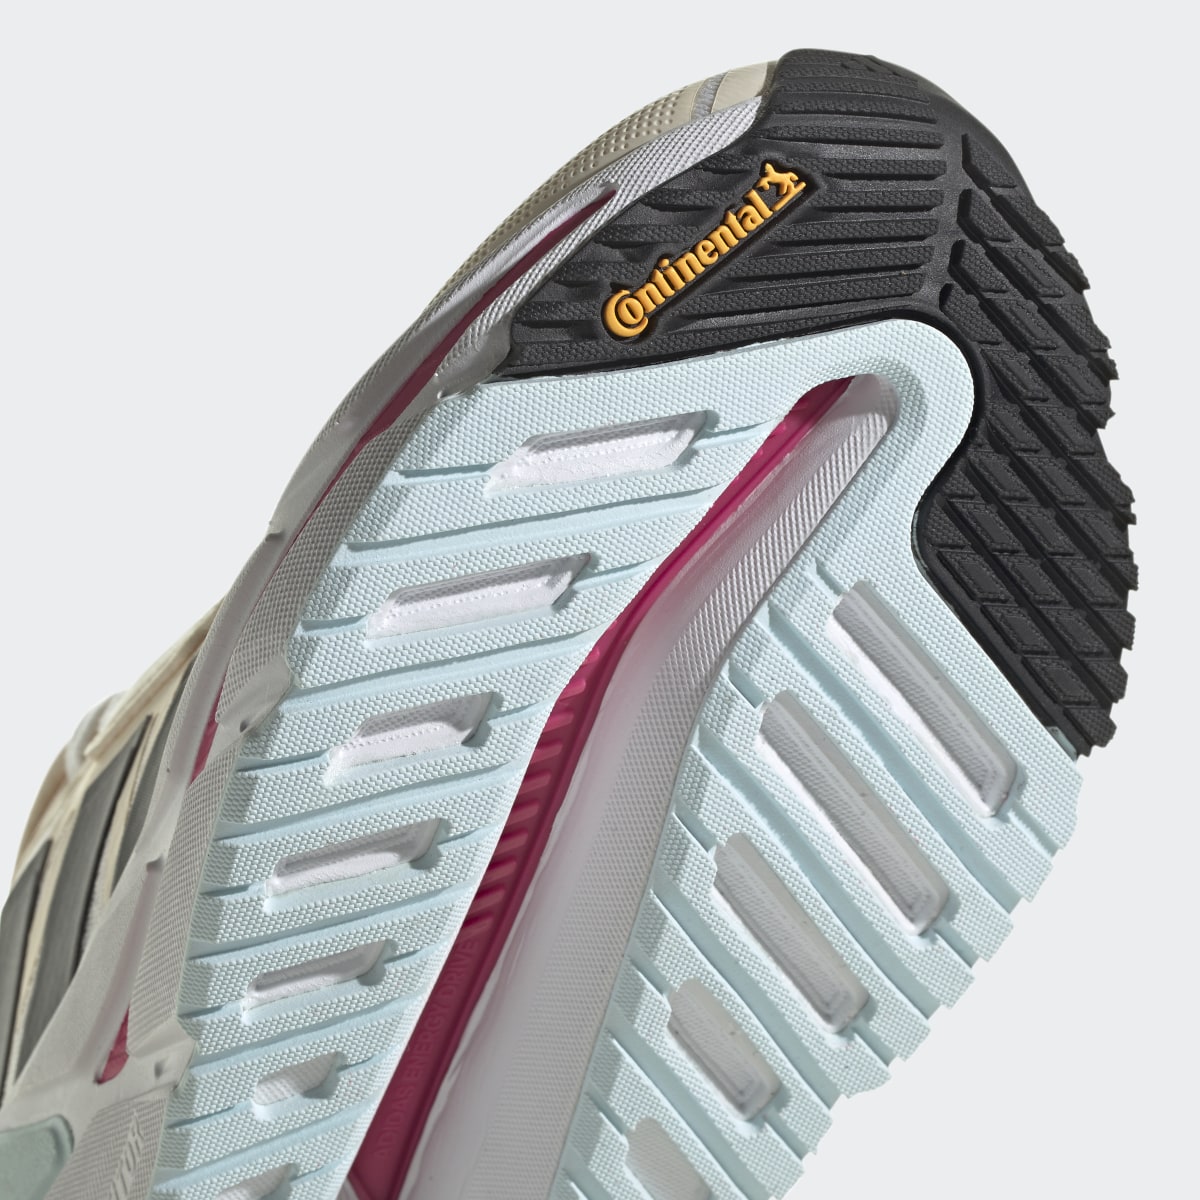 Adidas Scarpe adistar CS. 10